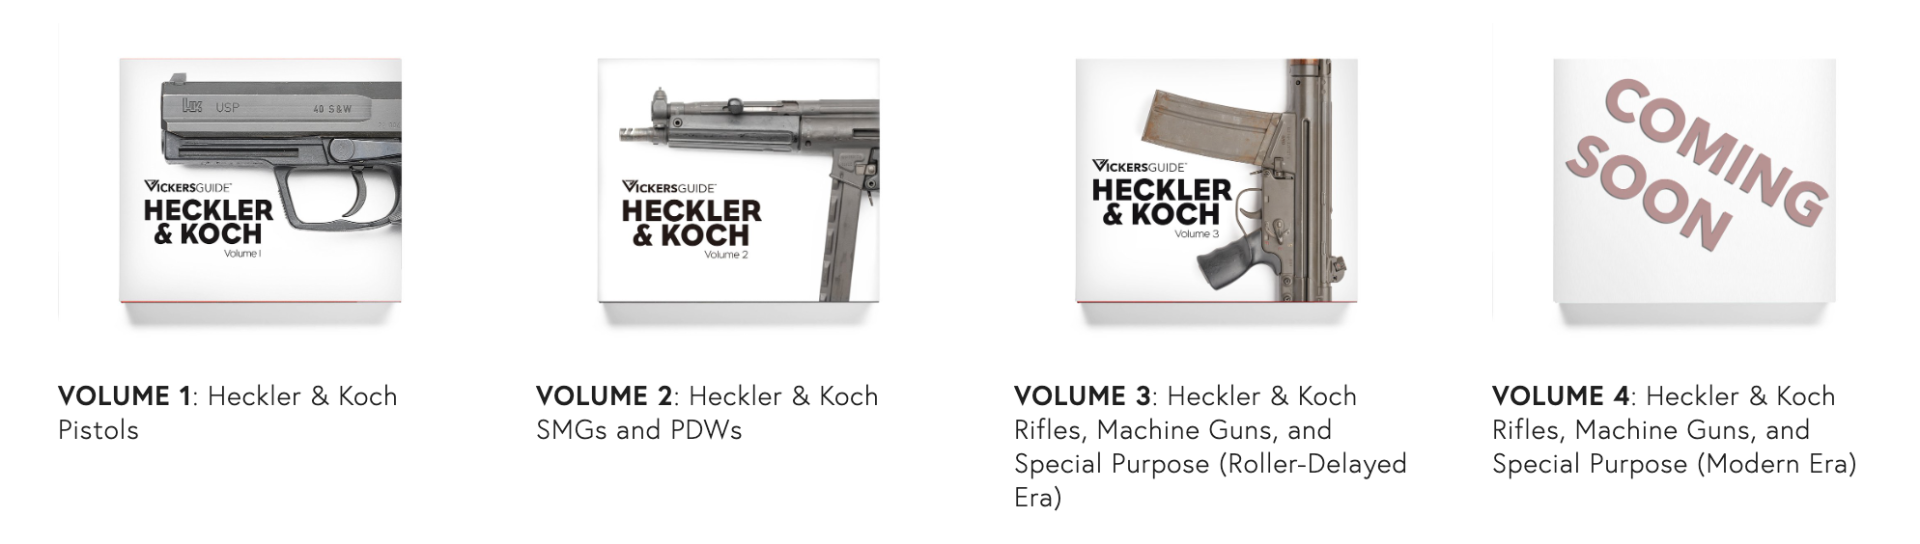 Vickers Guide: Heckler & Koch vol. 3